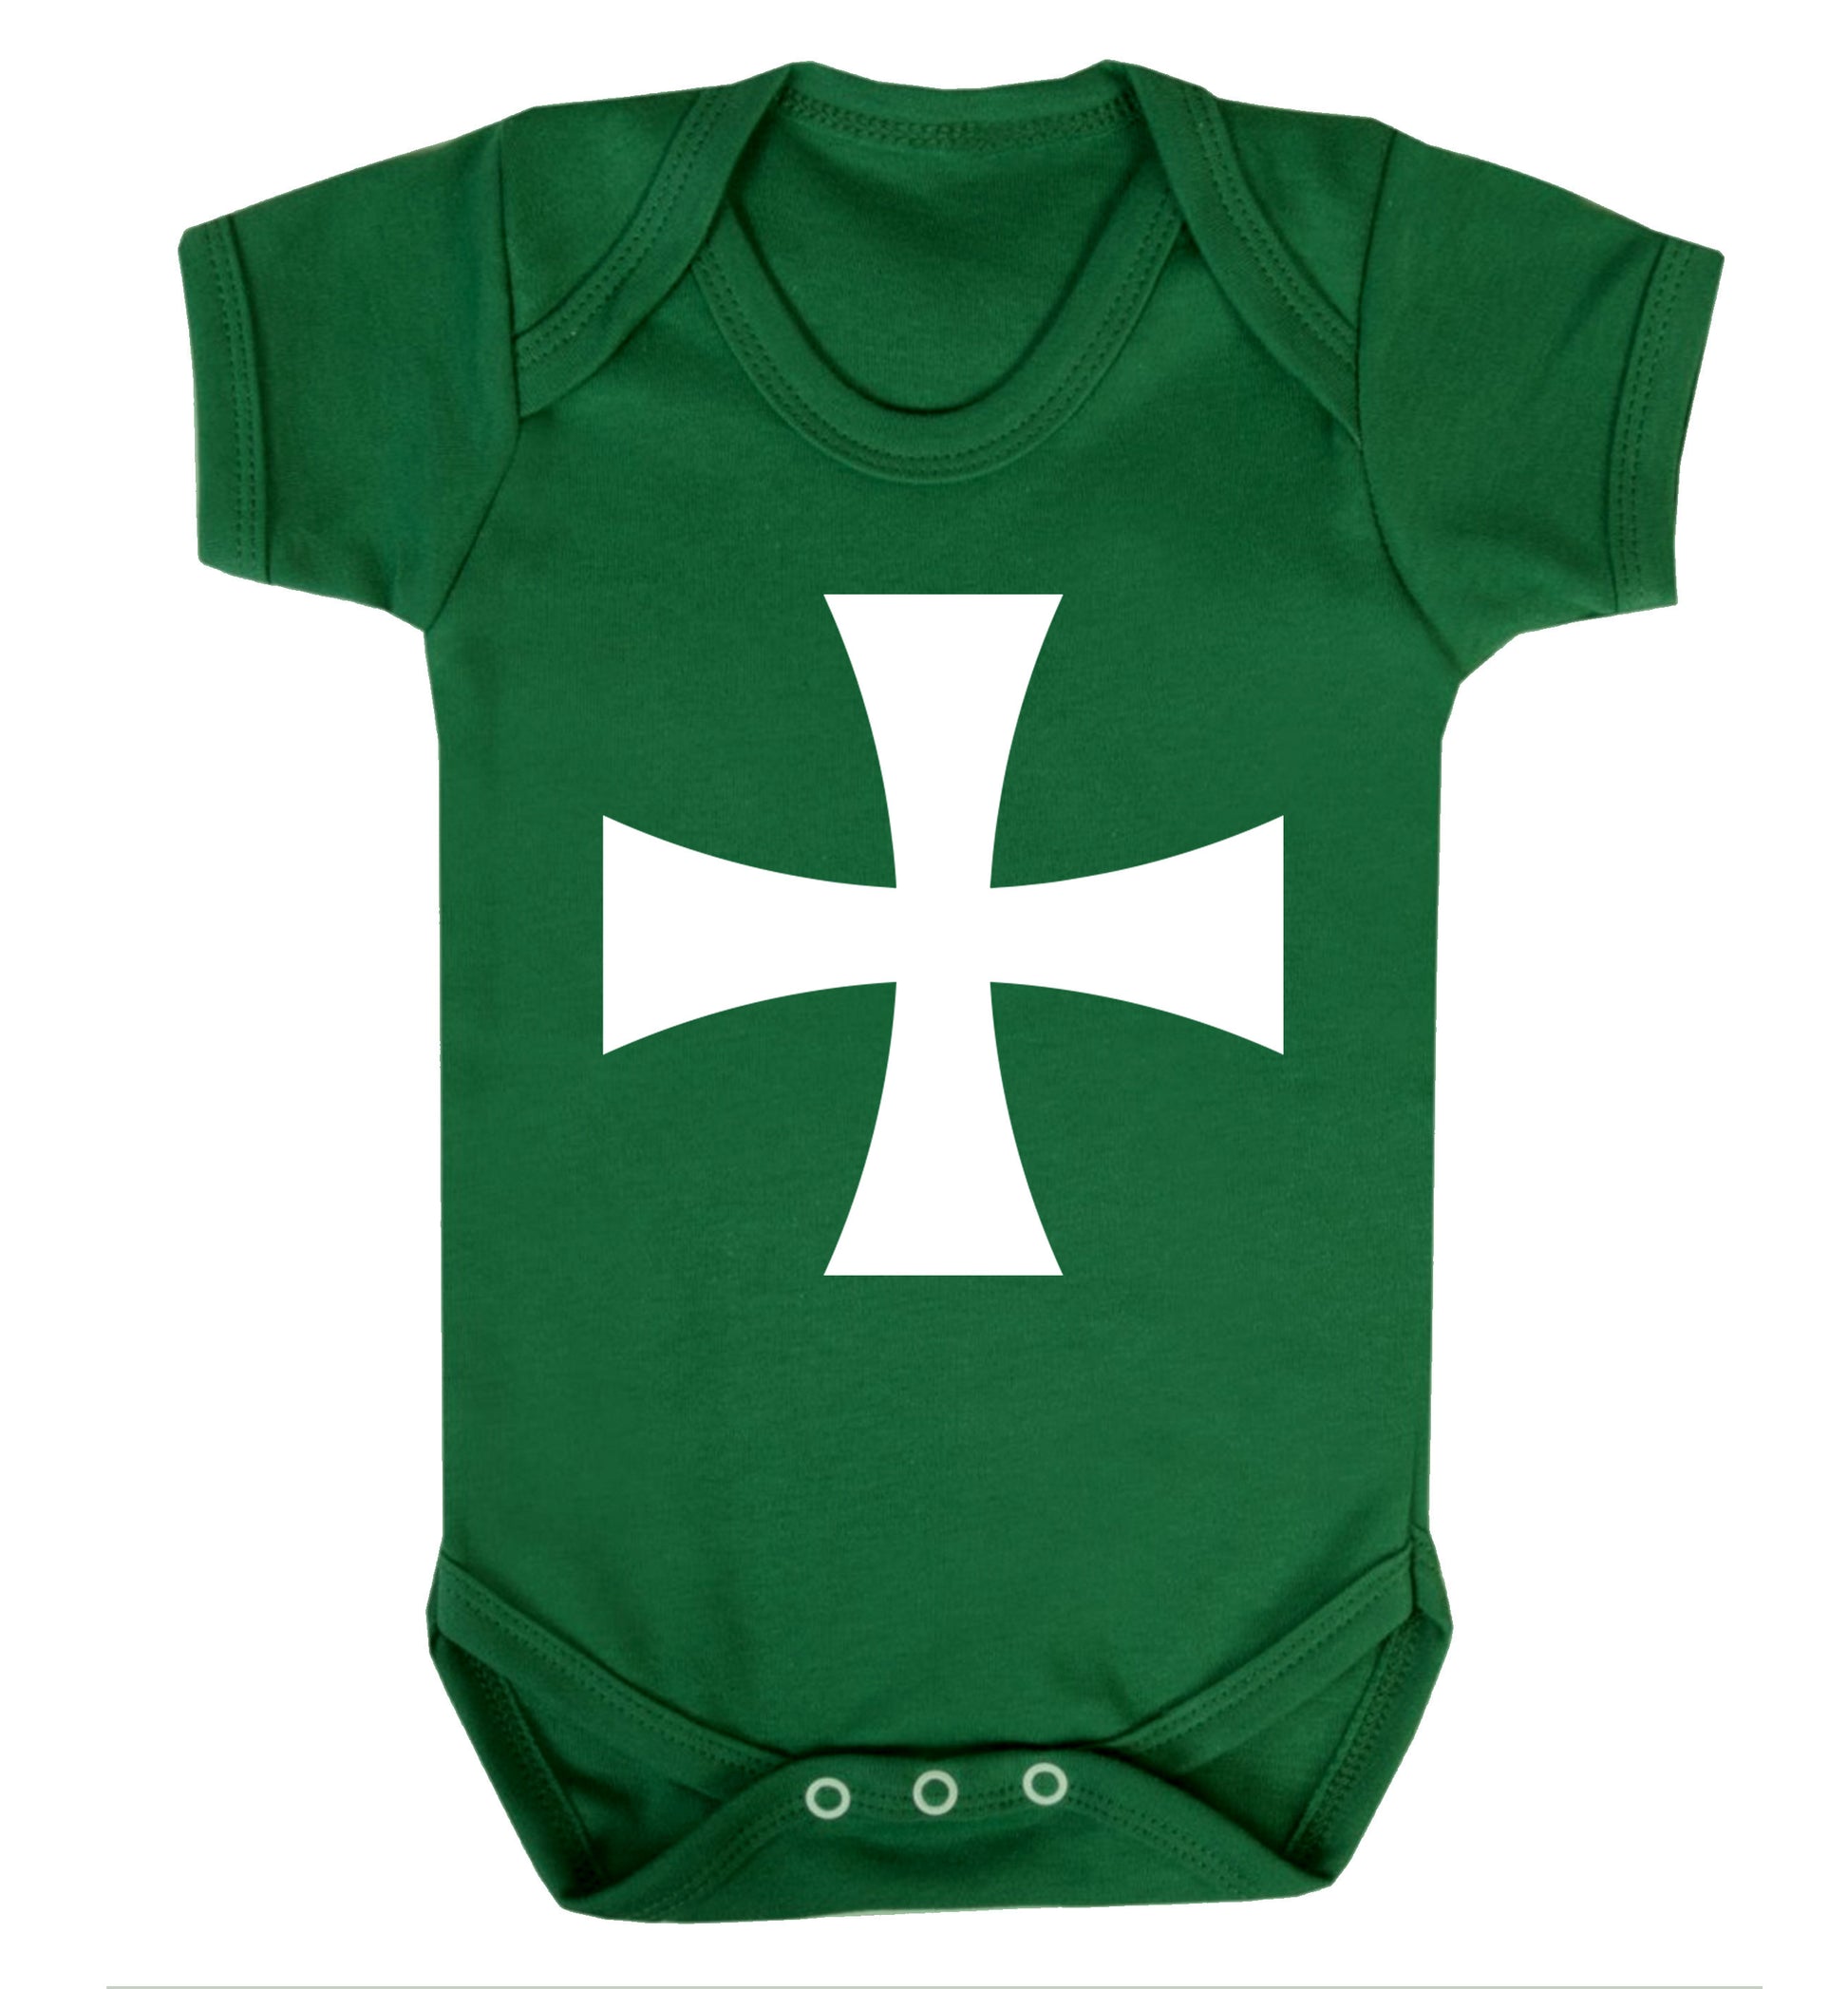 Knights Templar cross Baby Vest green 18-24 months